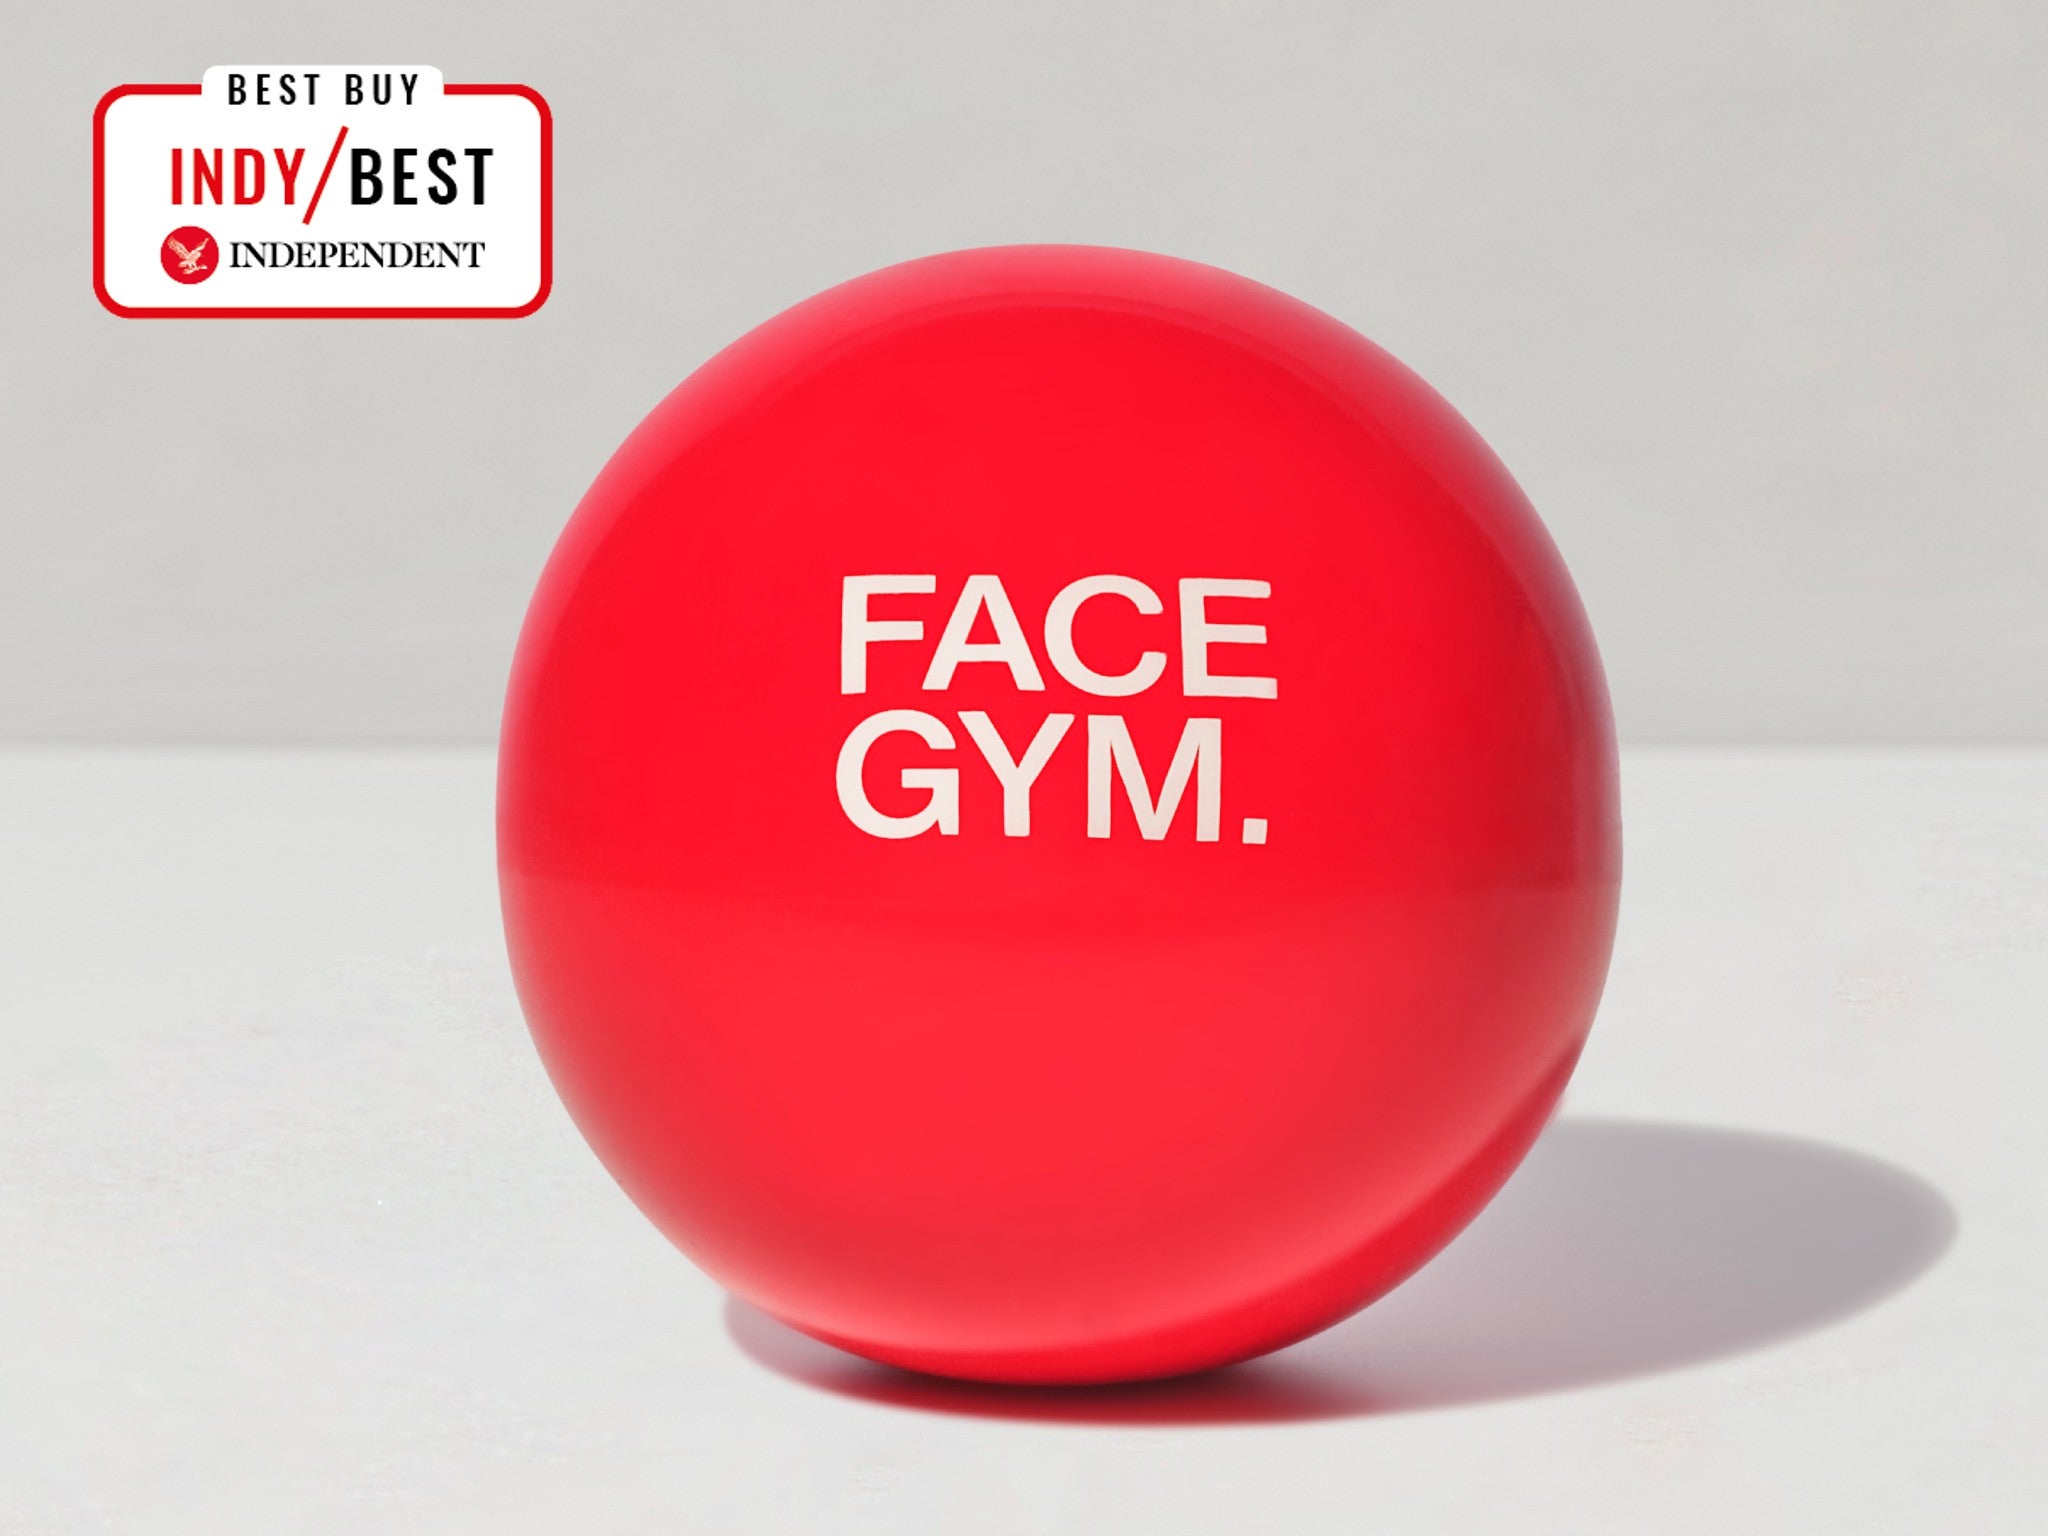 FaceGym weighted face ball